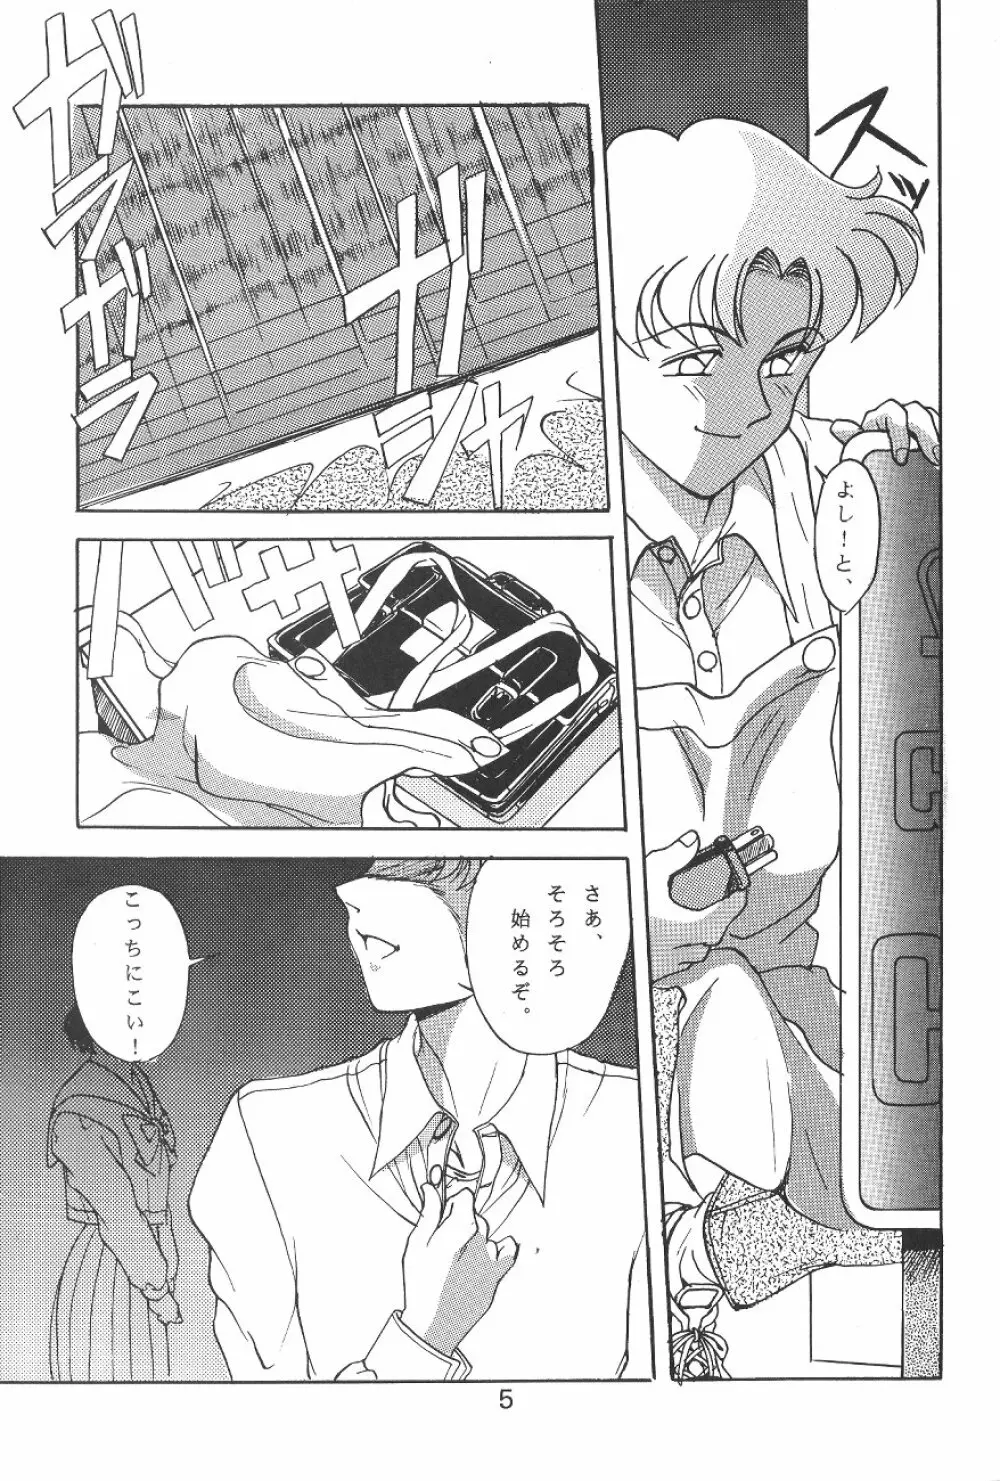 KATZE 7 下巻 - page5